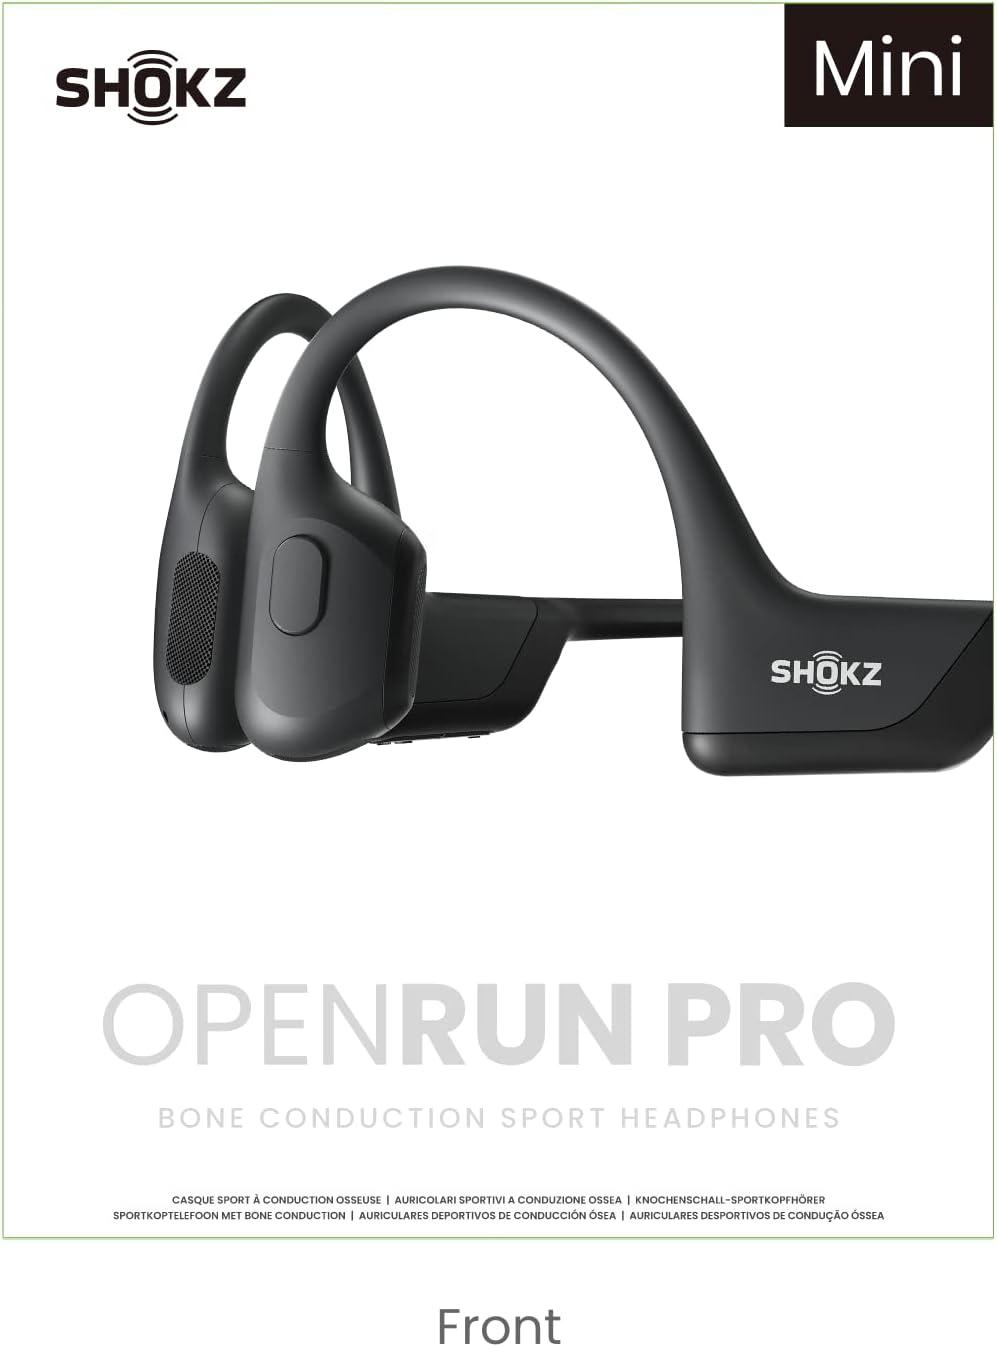 SHOKZ OpenRun Pro Mini - Premium Bone Conduction Open-Ear 